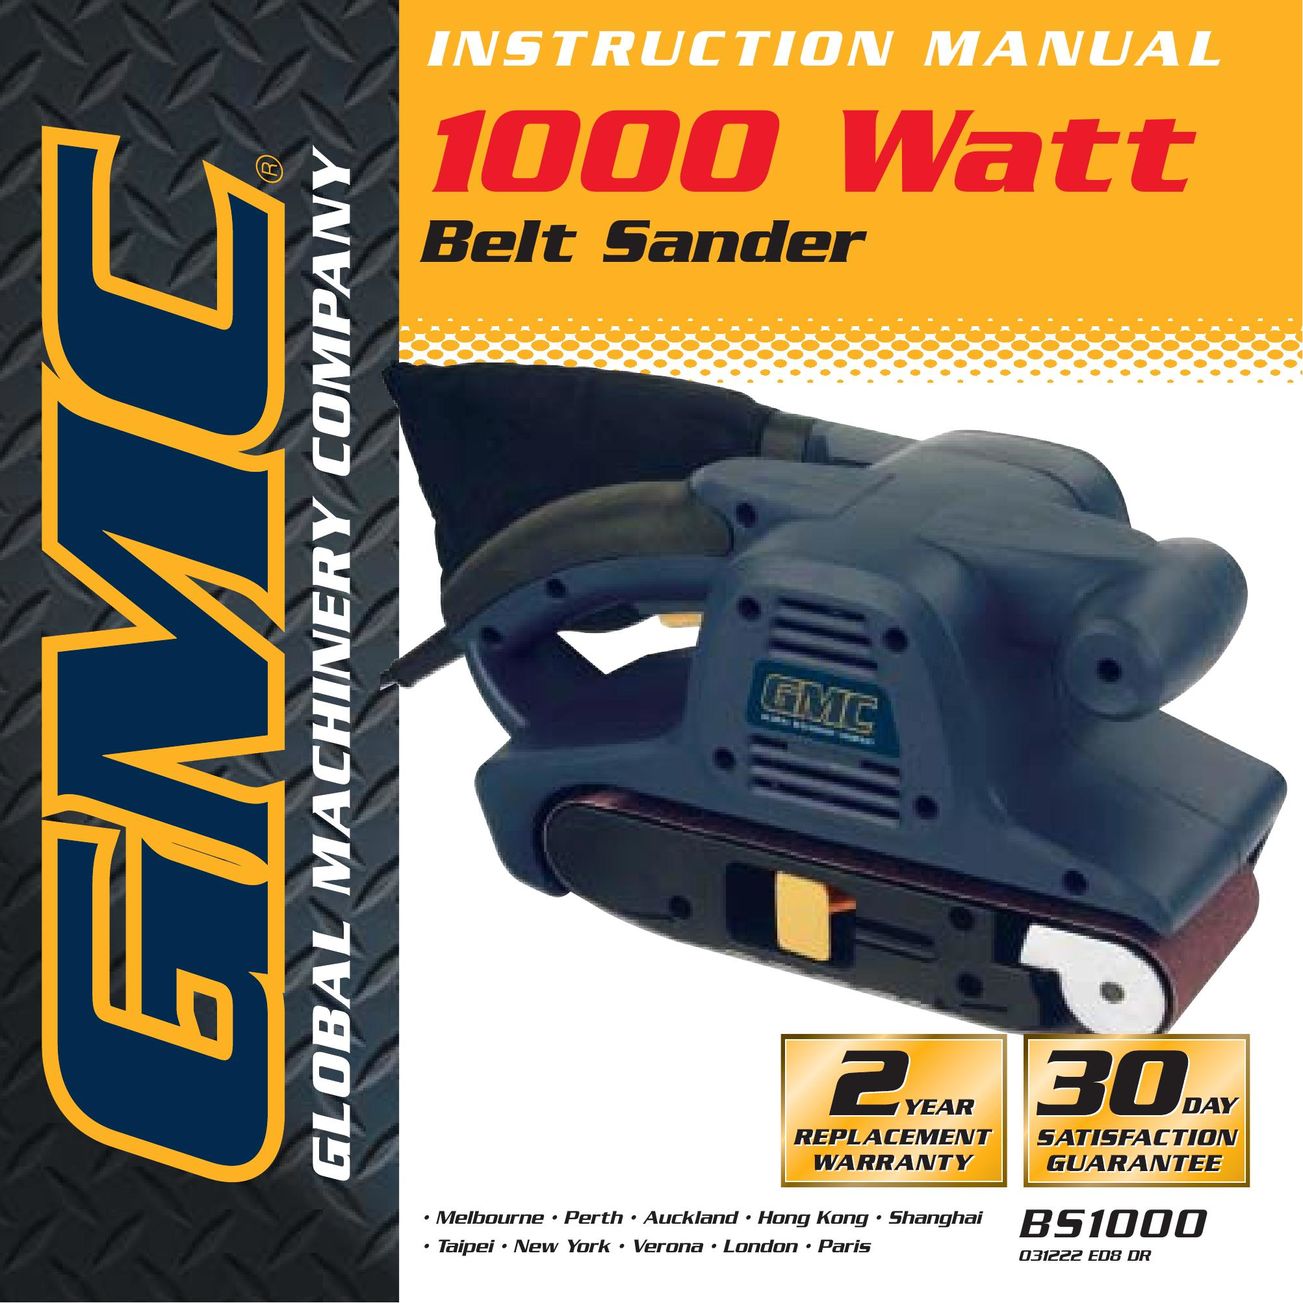 Global Machinery Company BS1000 Sander User Manual